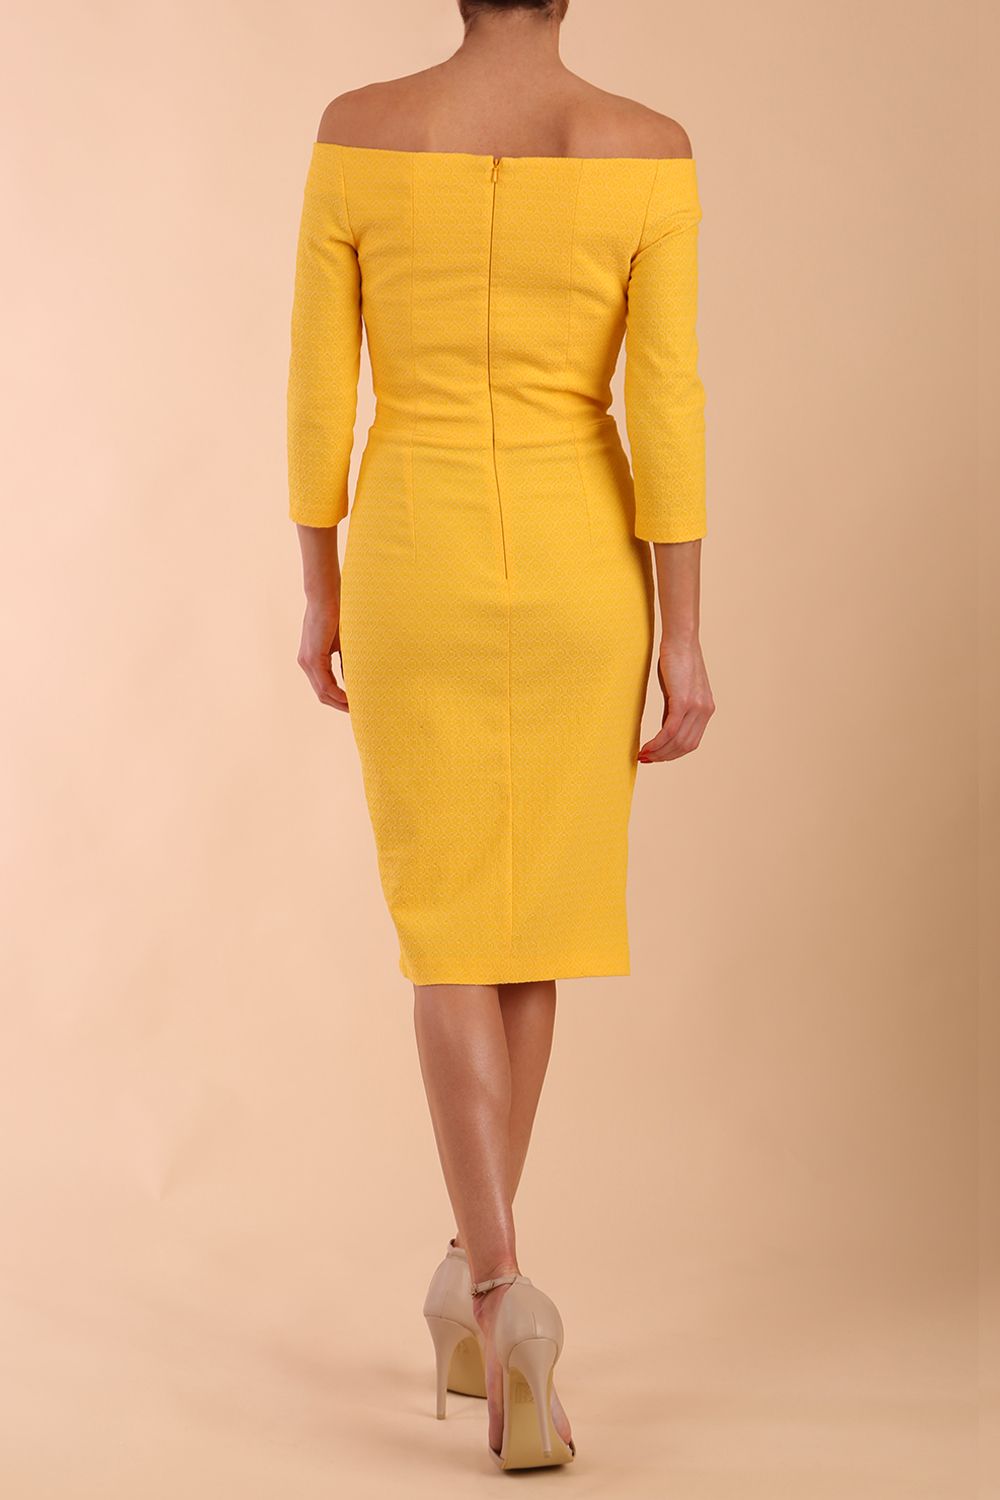 Model wearing diva catwalk Trixie dress in Sunrise Yellow back